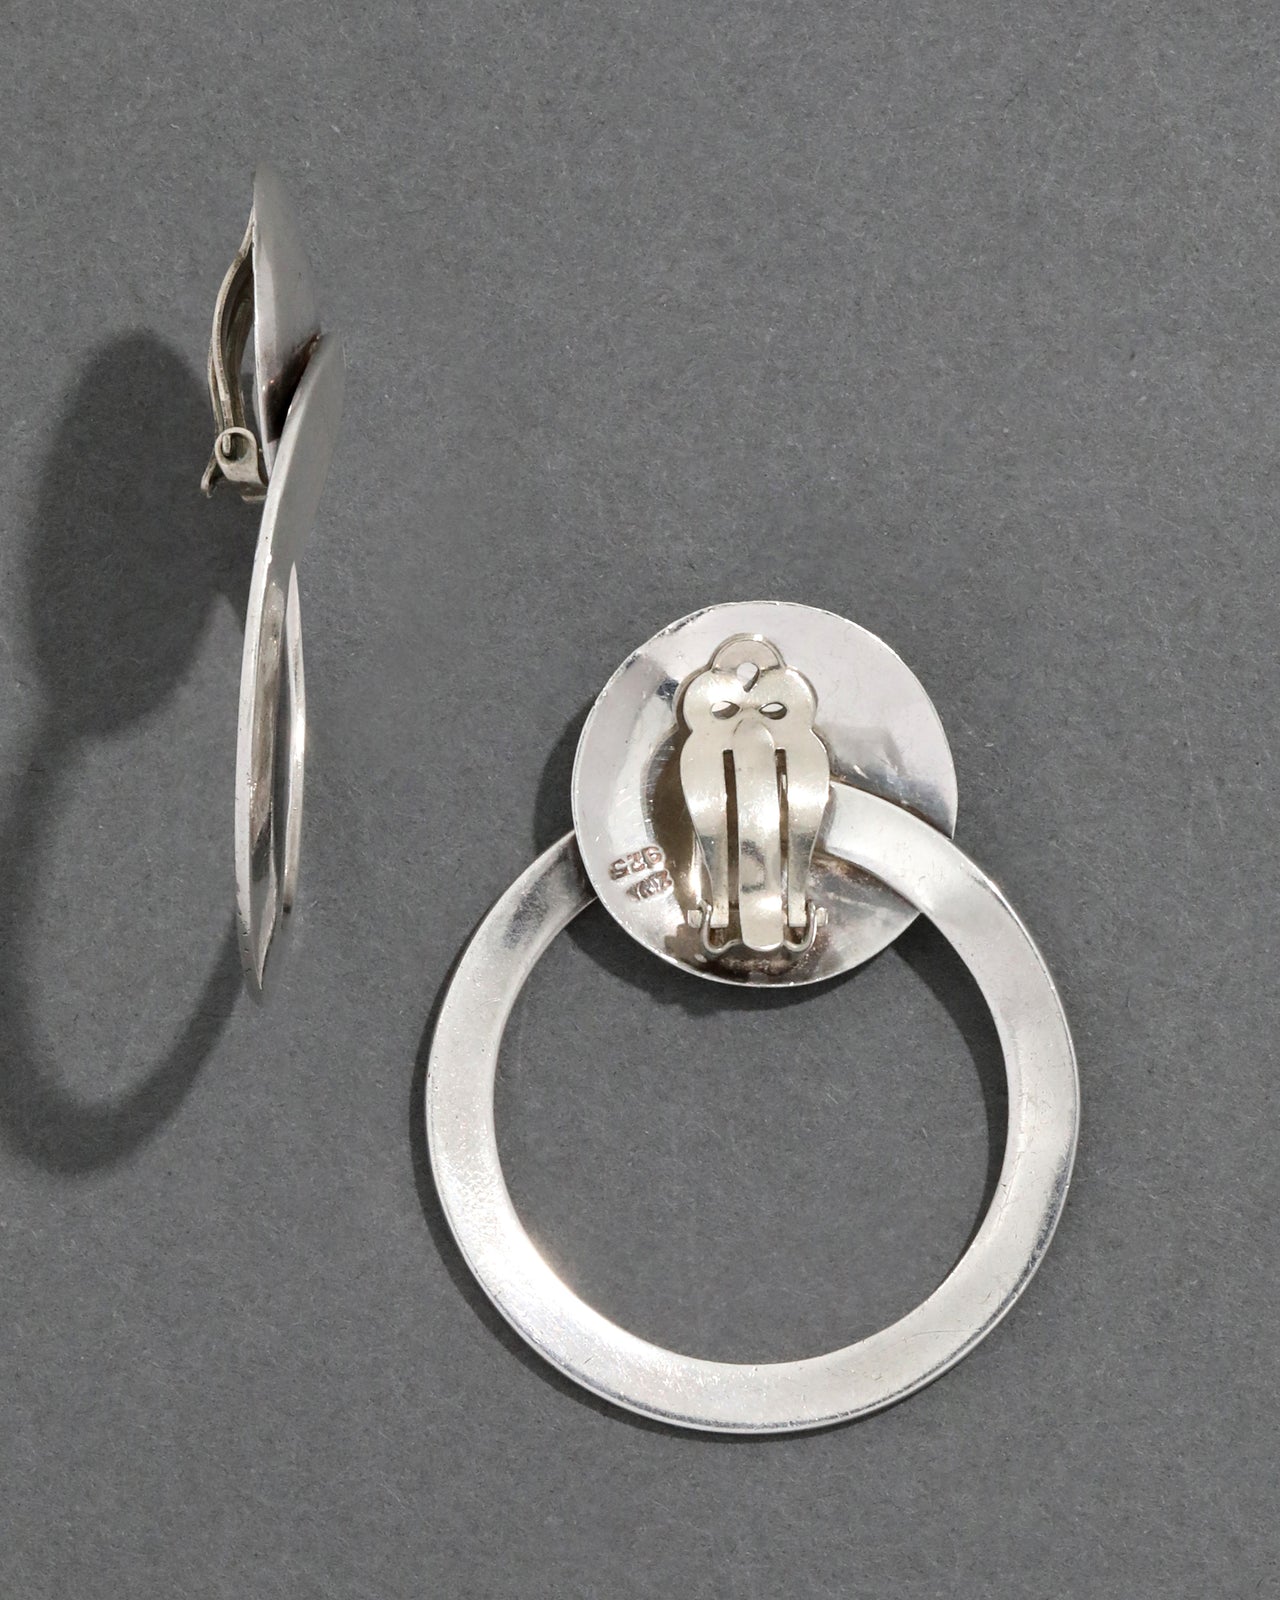 Vintage 1980s Sterling Silver Geometric Clip Earrings - Photo 2